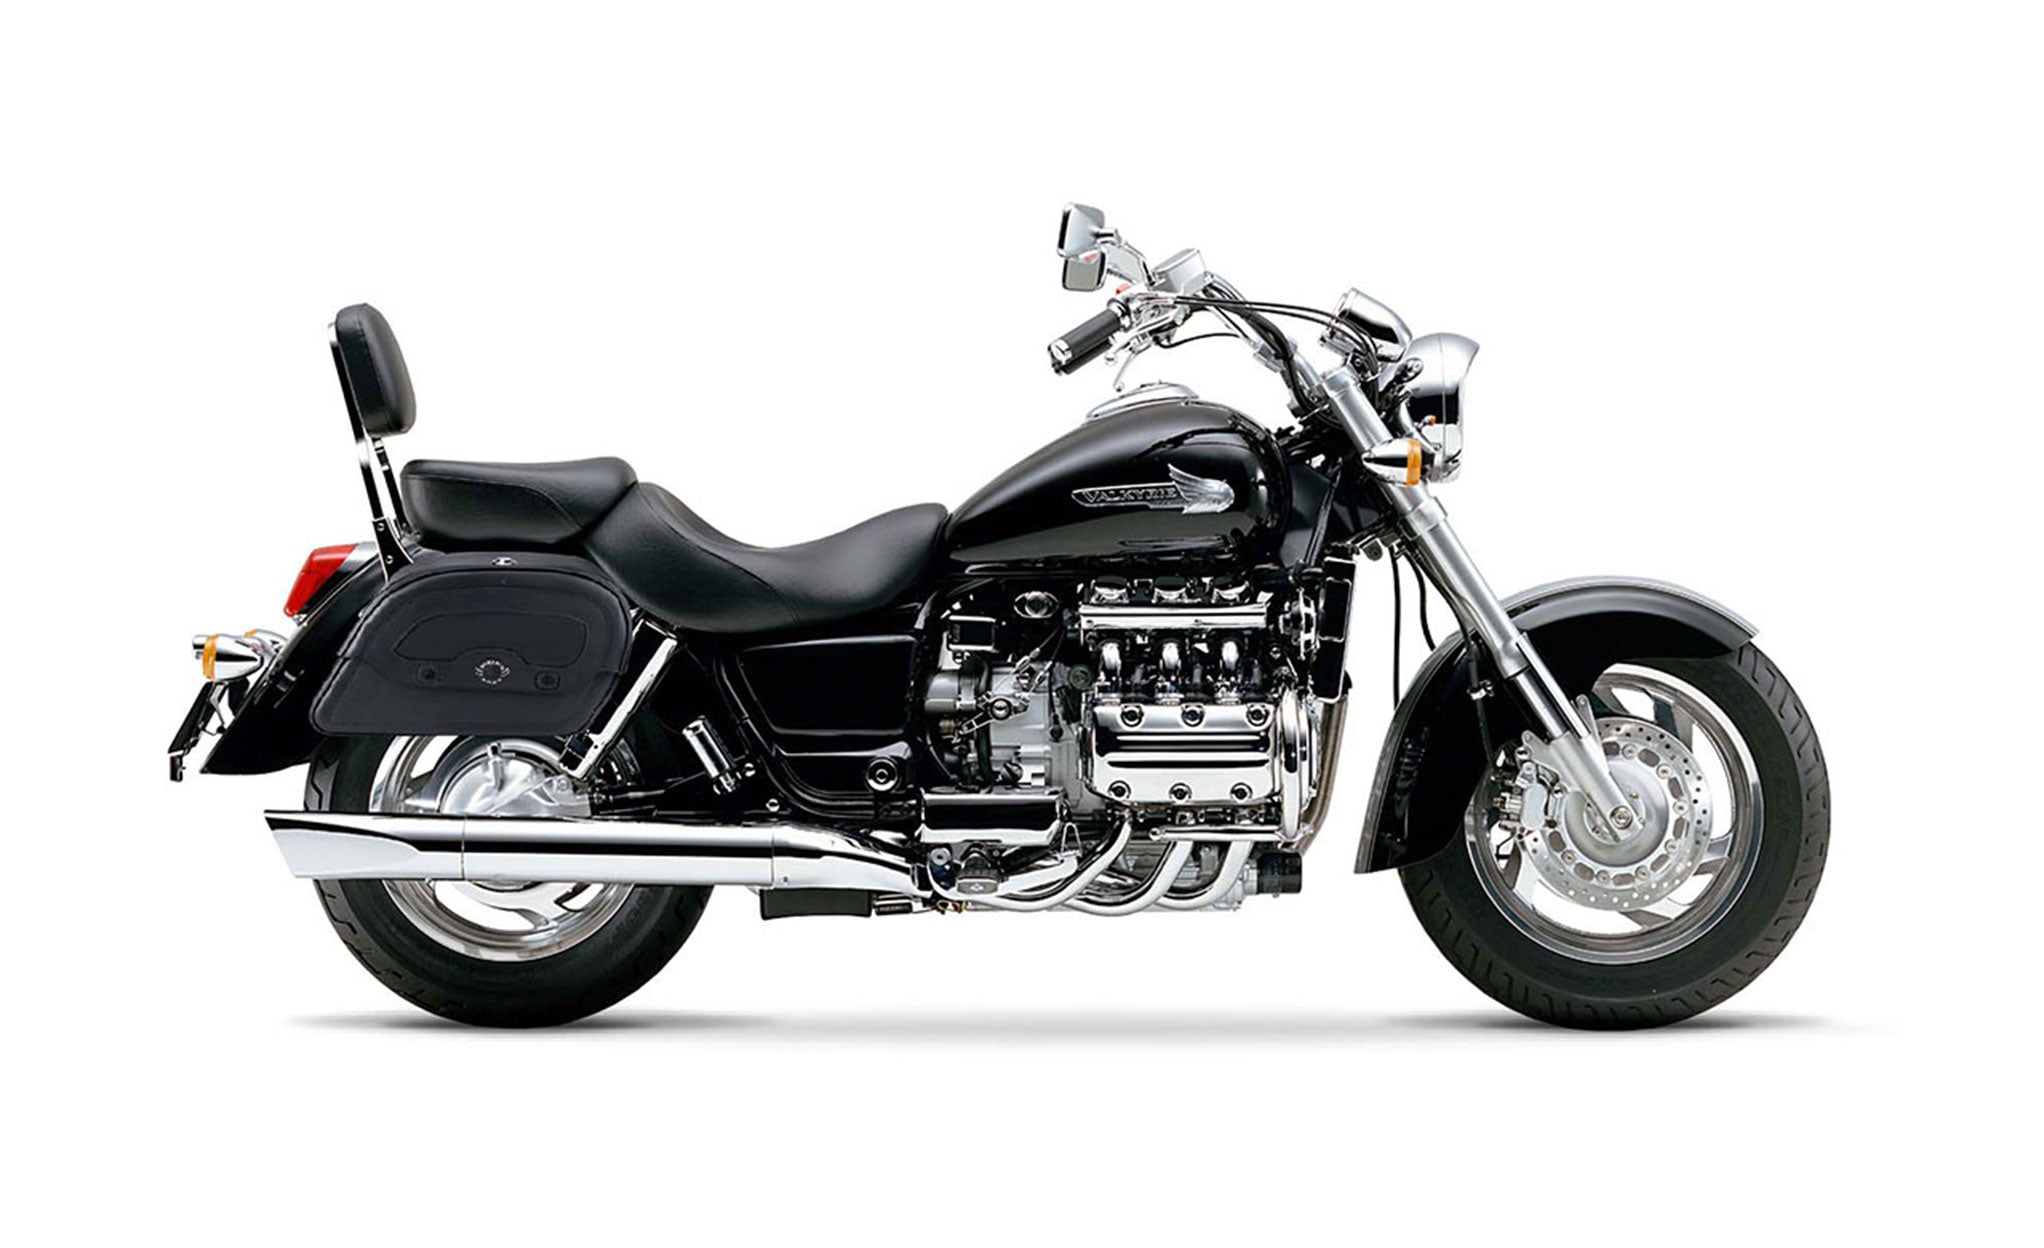 Viking Warrior Medium Honda 1500 Valkyrie Standard Leather Motorcycle Saddlebags on Bike Photo @expand